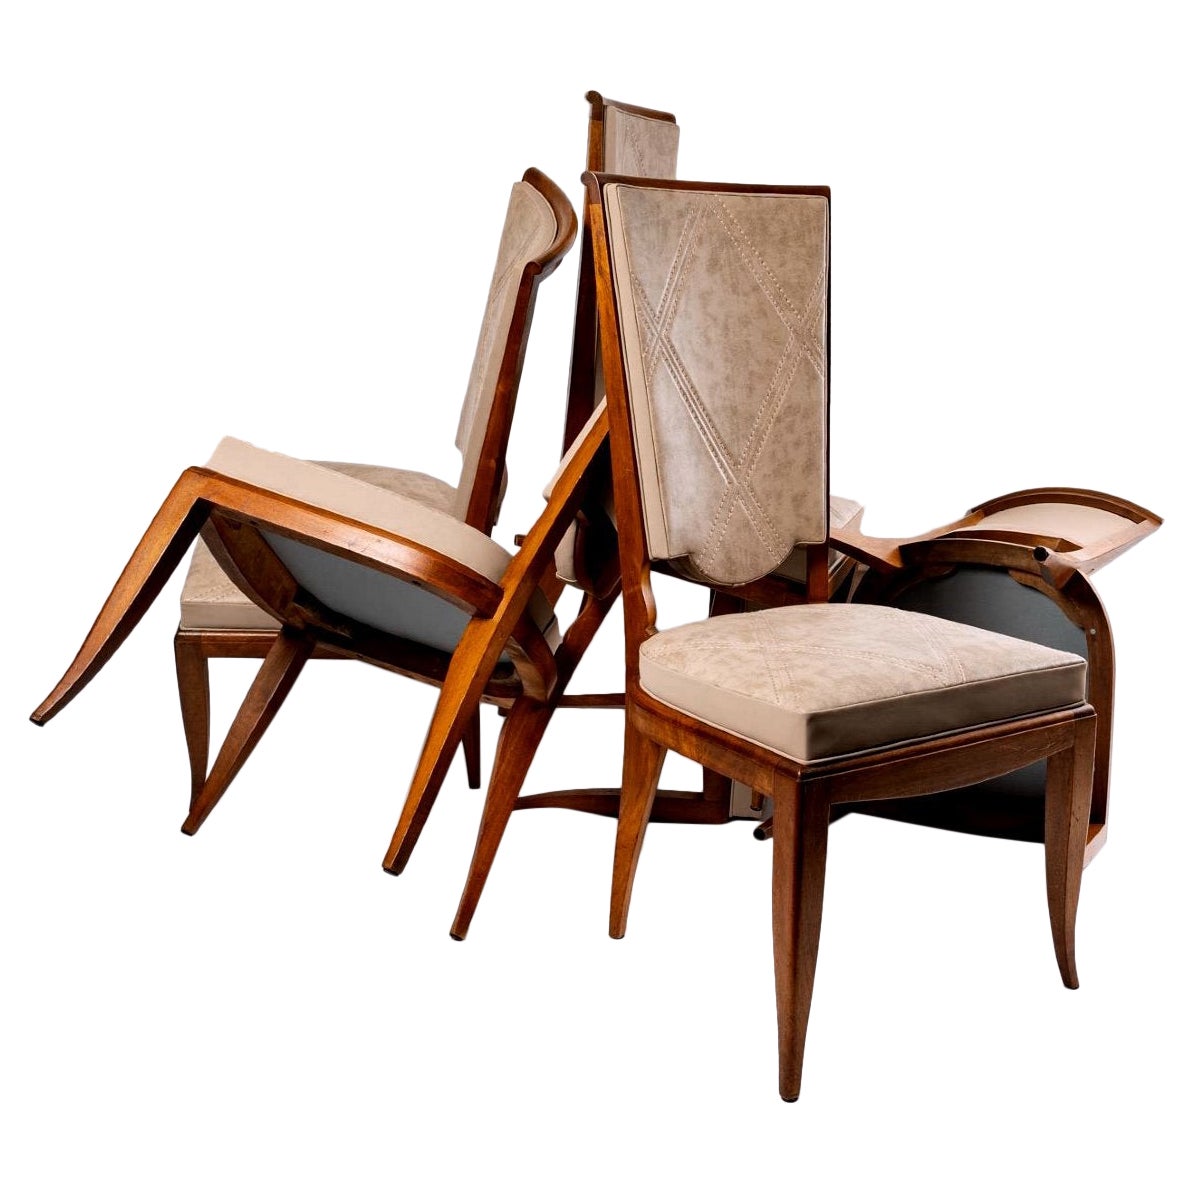 Suite of Six Cabriolet Teak Chairs in Jules Leleu Taste, Period: 20th Century